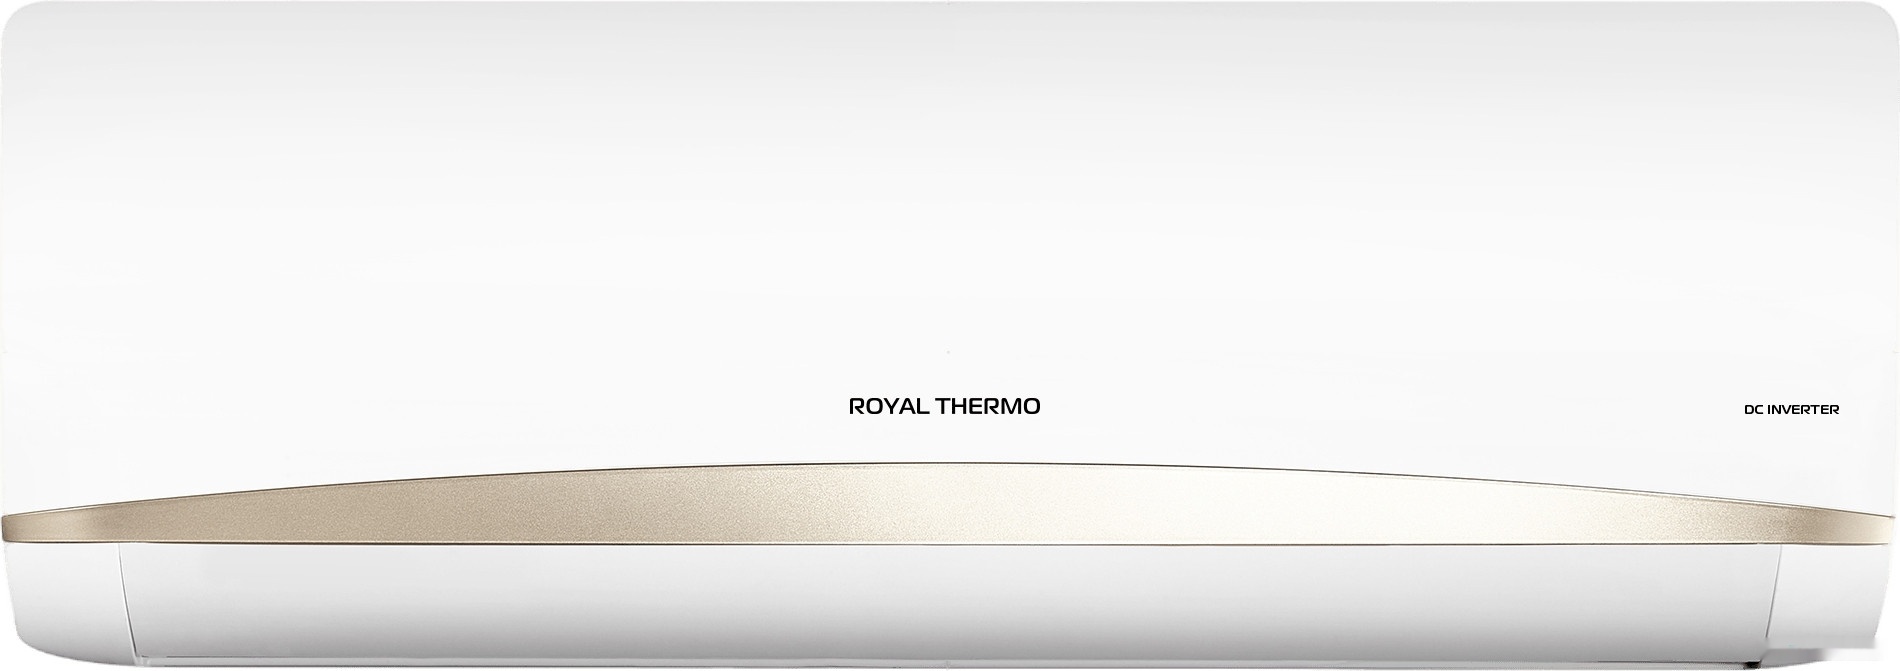 кондиционер royal thermo perfecto dc rtpi-07hn8